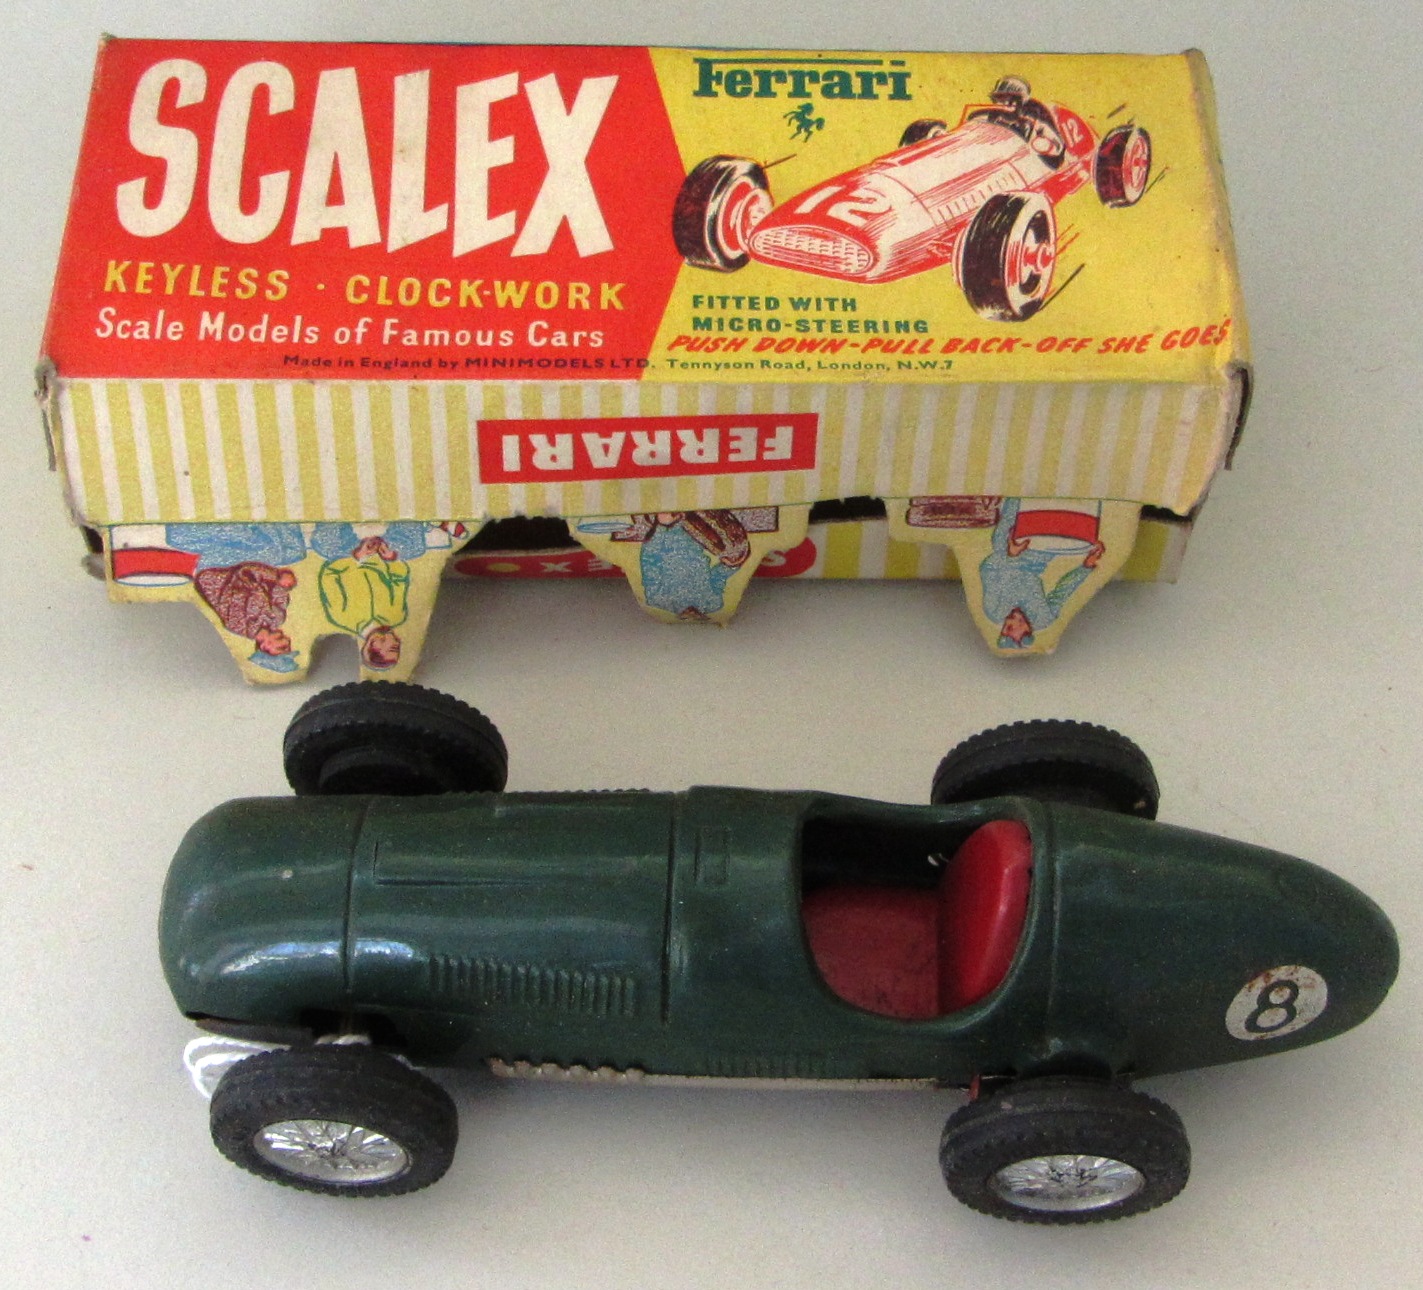 A Scalex keyless clockwork Ferrari car, boxed (a.f).